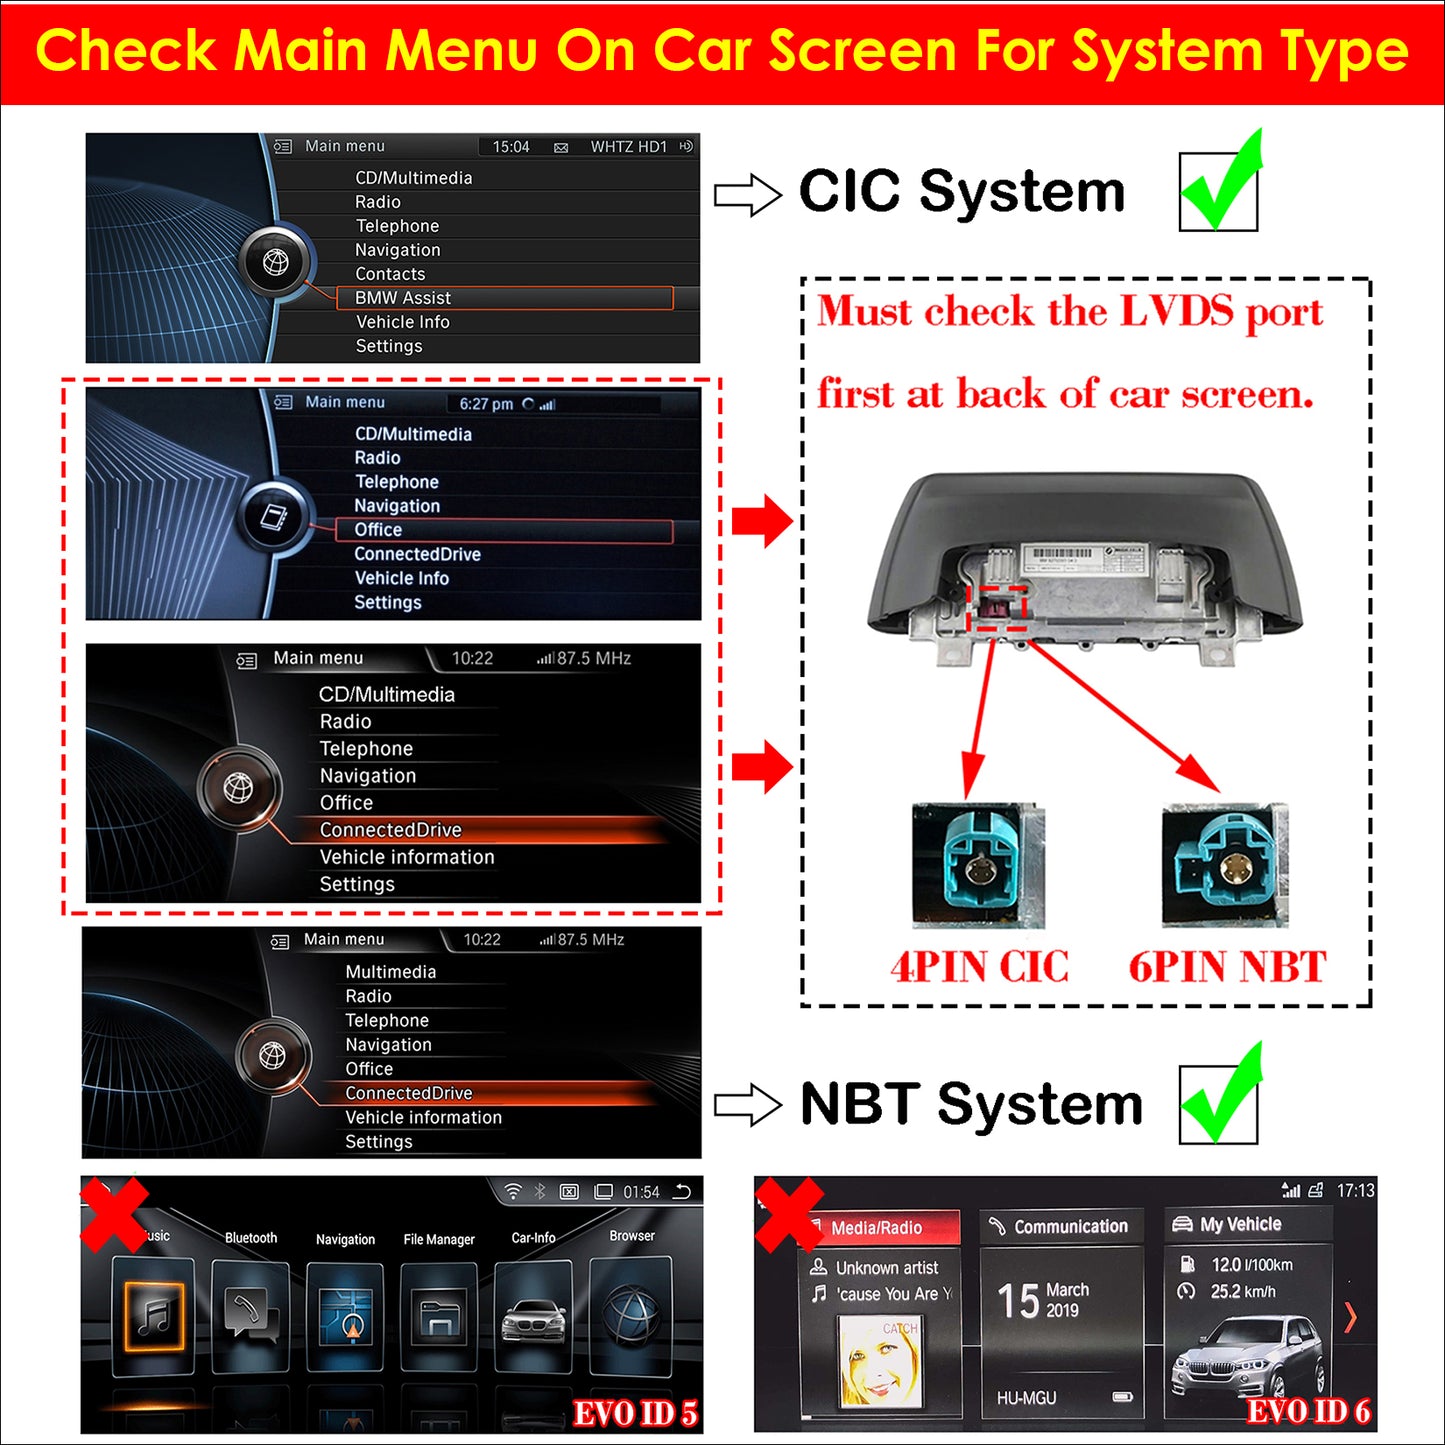 CarProKit Wireless CarPlay Retrofit Kit + Aftermarket Camera for BMW 1/2/3/4/5/6/7/ X1-X7 Series with CIC System 2009 -2014  / NBT Syetem 2013 - 2016